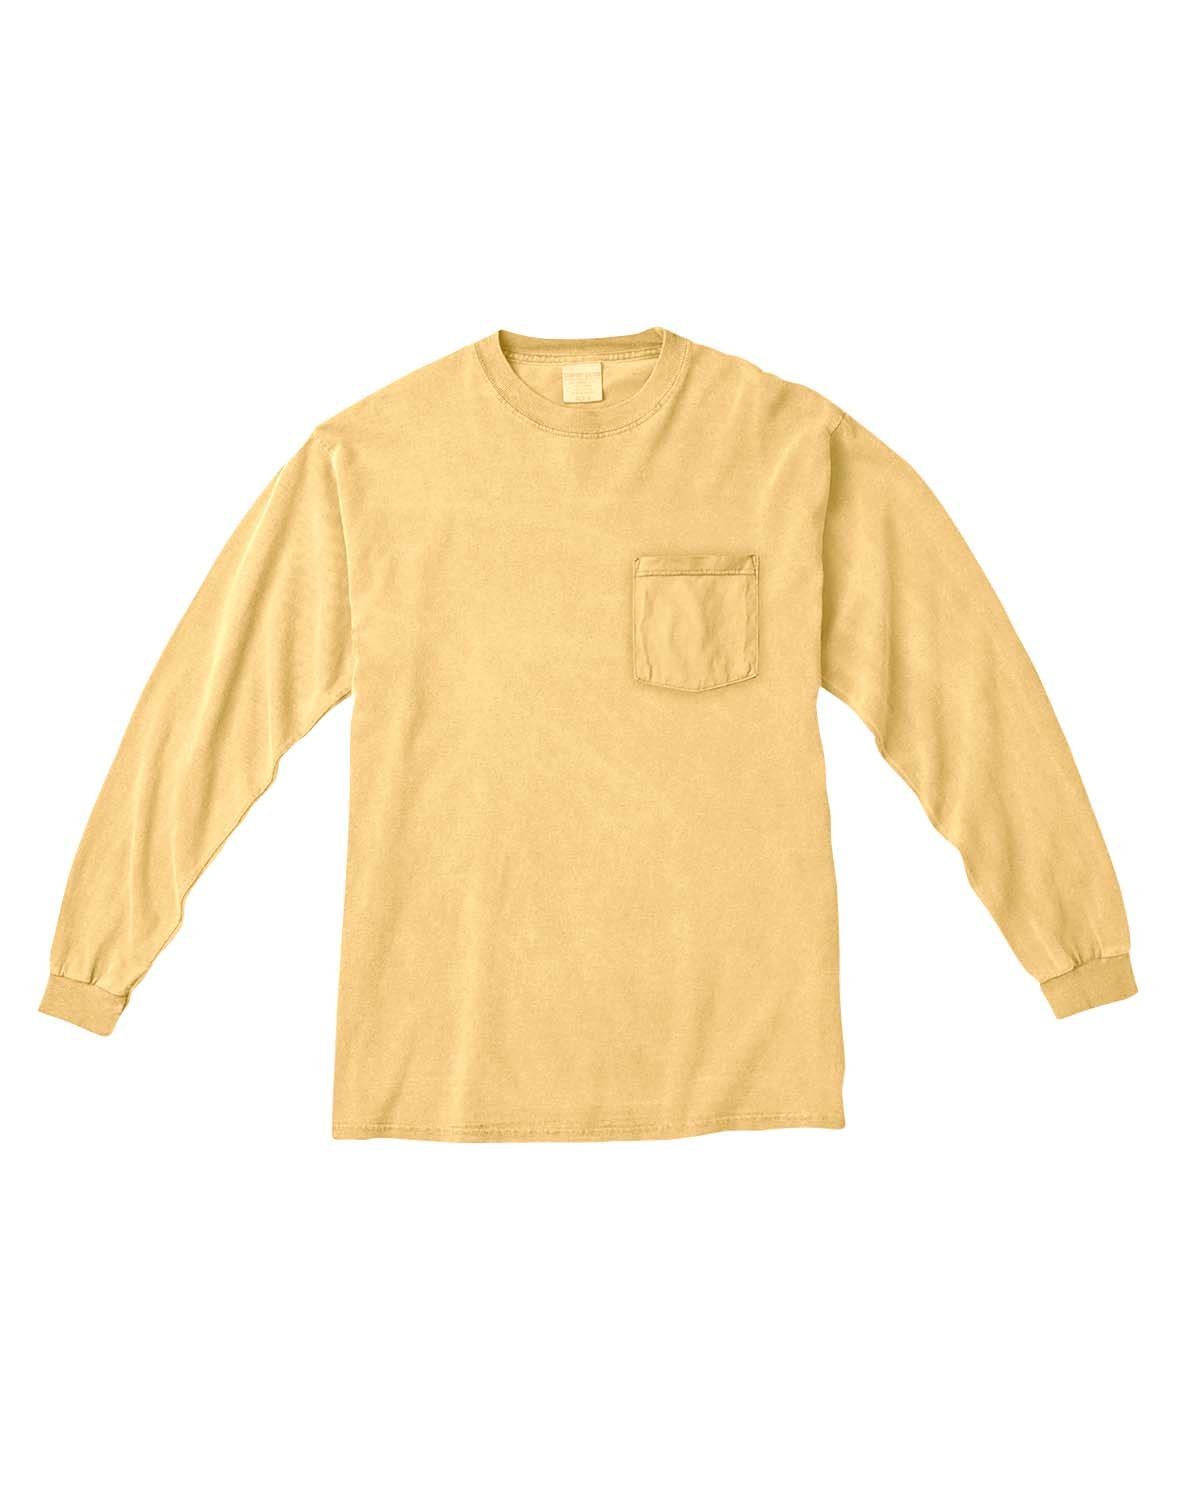 C4410-Comfort Colors-BUTTER-Comfort Colors-T-Shirts-1